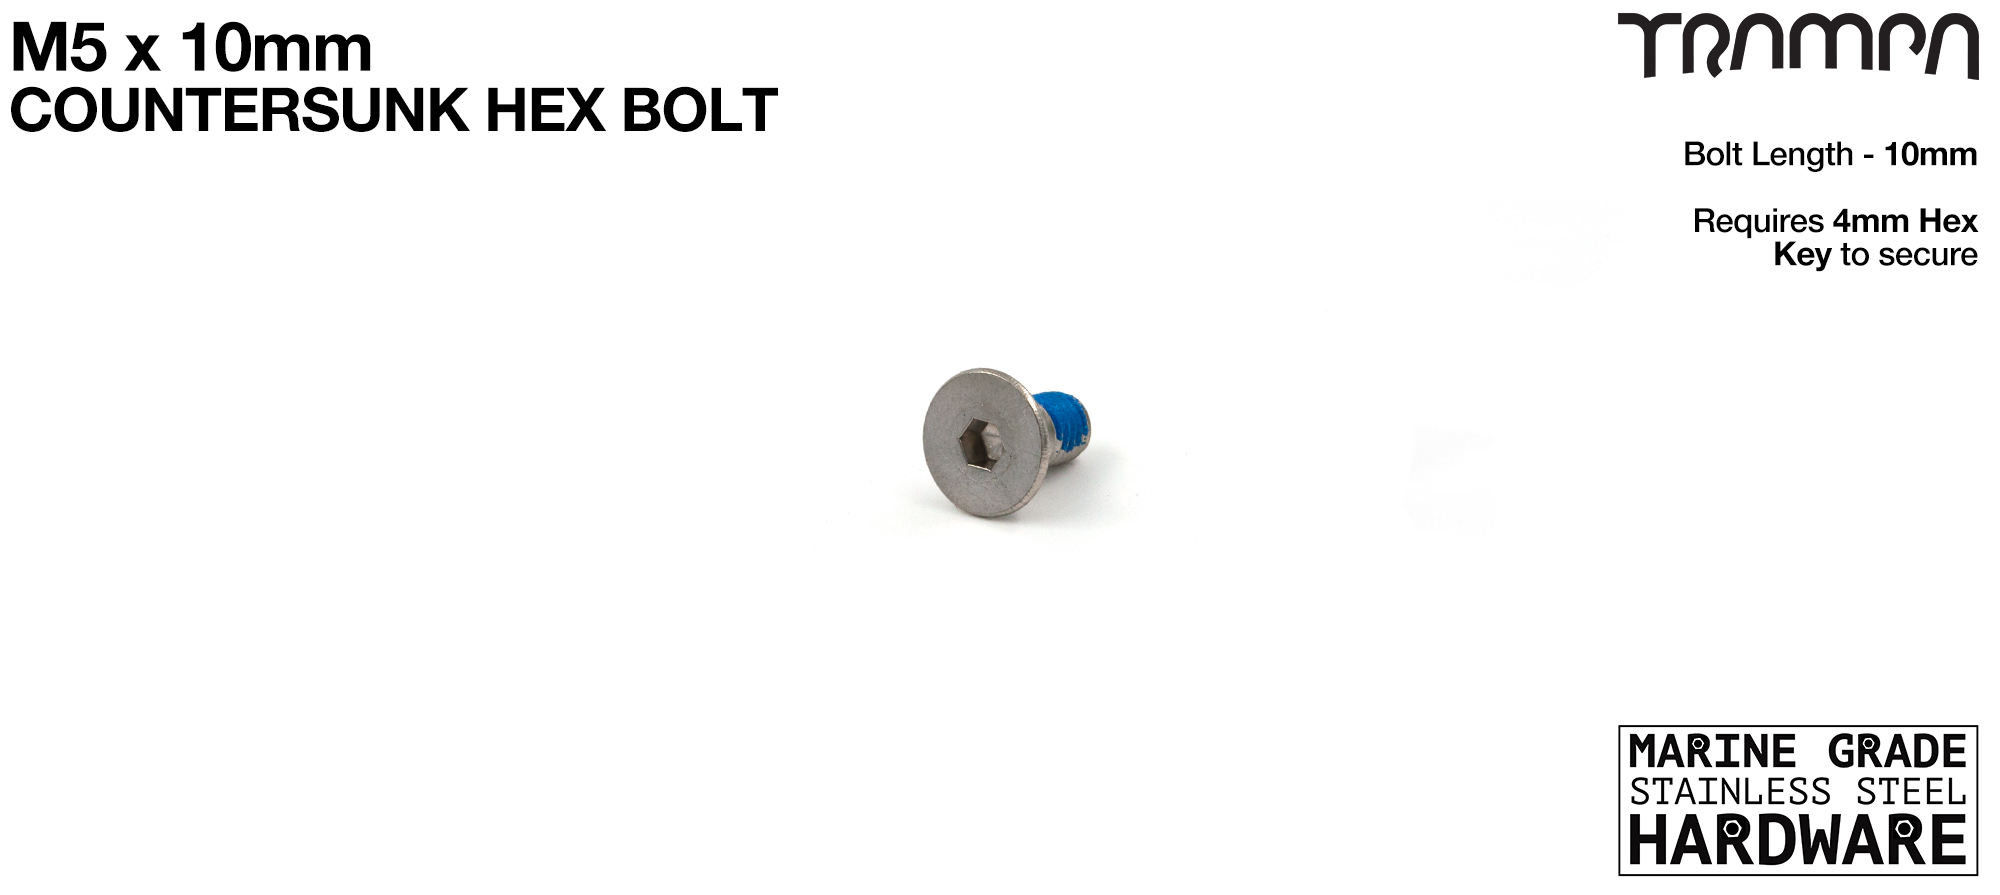 M5 x 10mm Countersunk Allen-Key Bolt - Marine Grade Stainless steel with locking paste